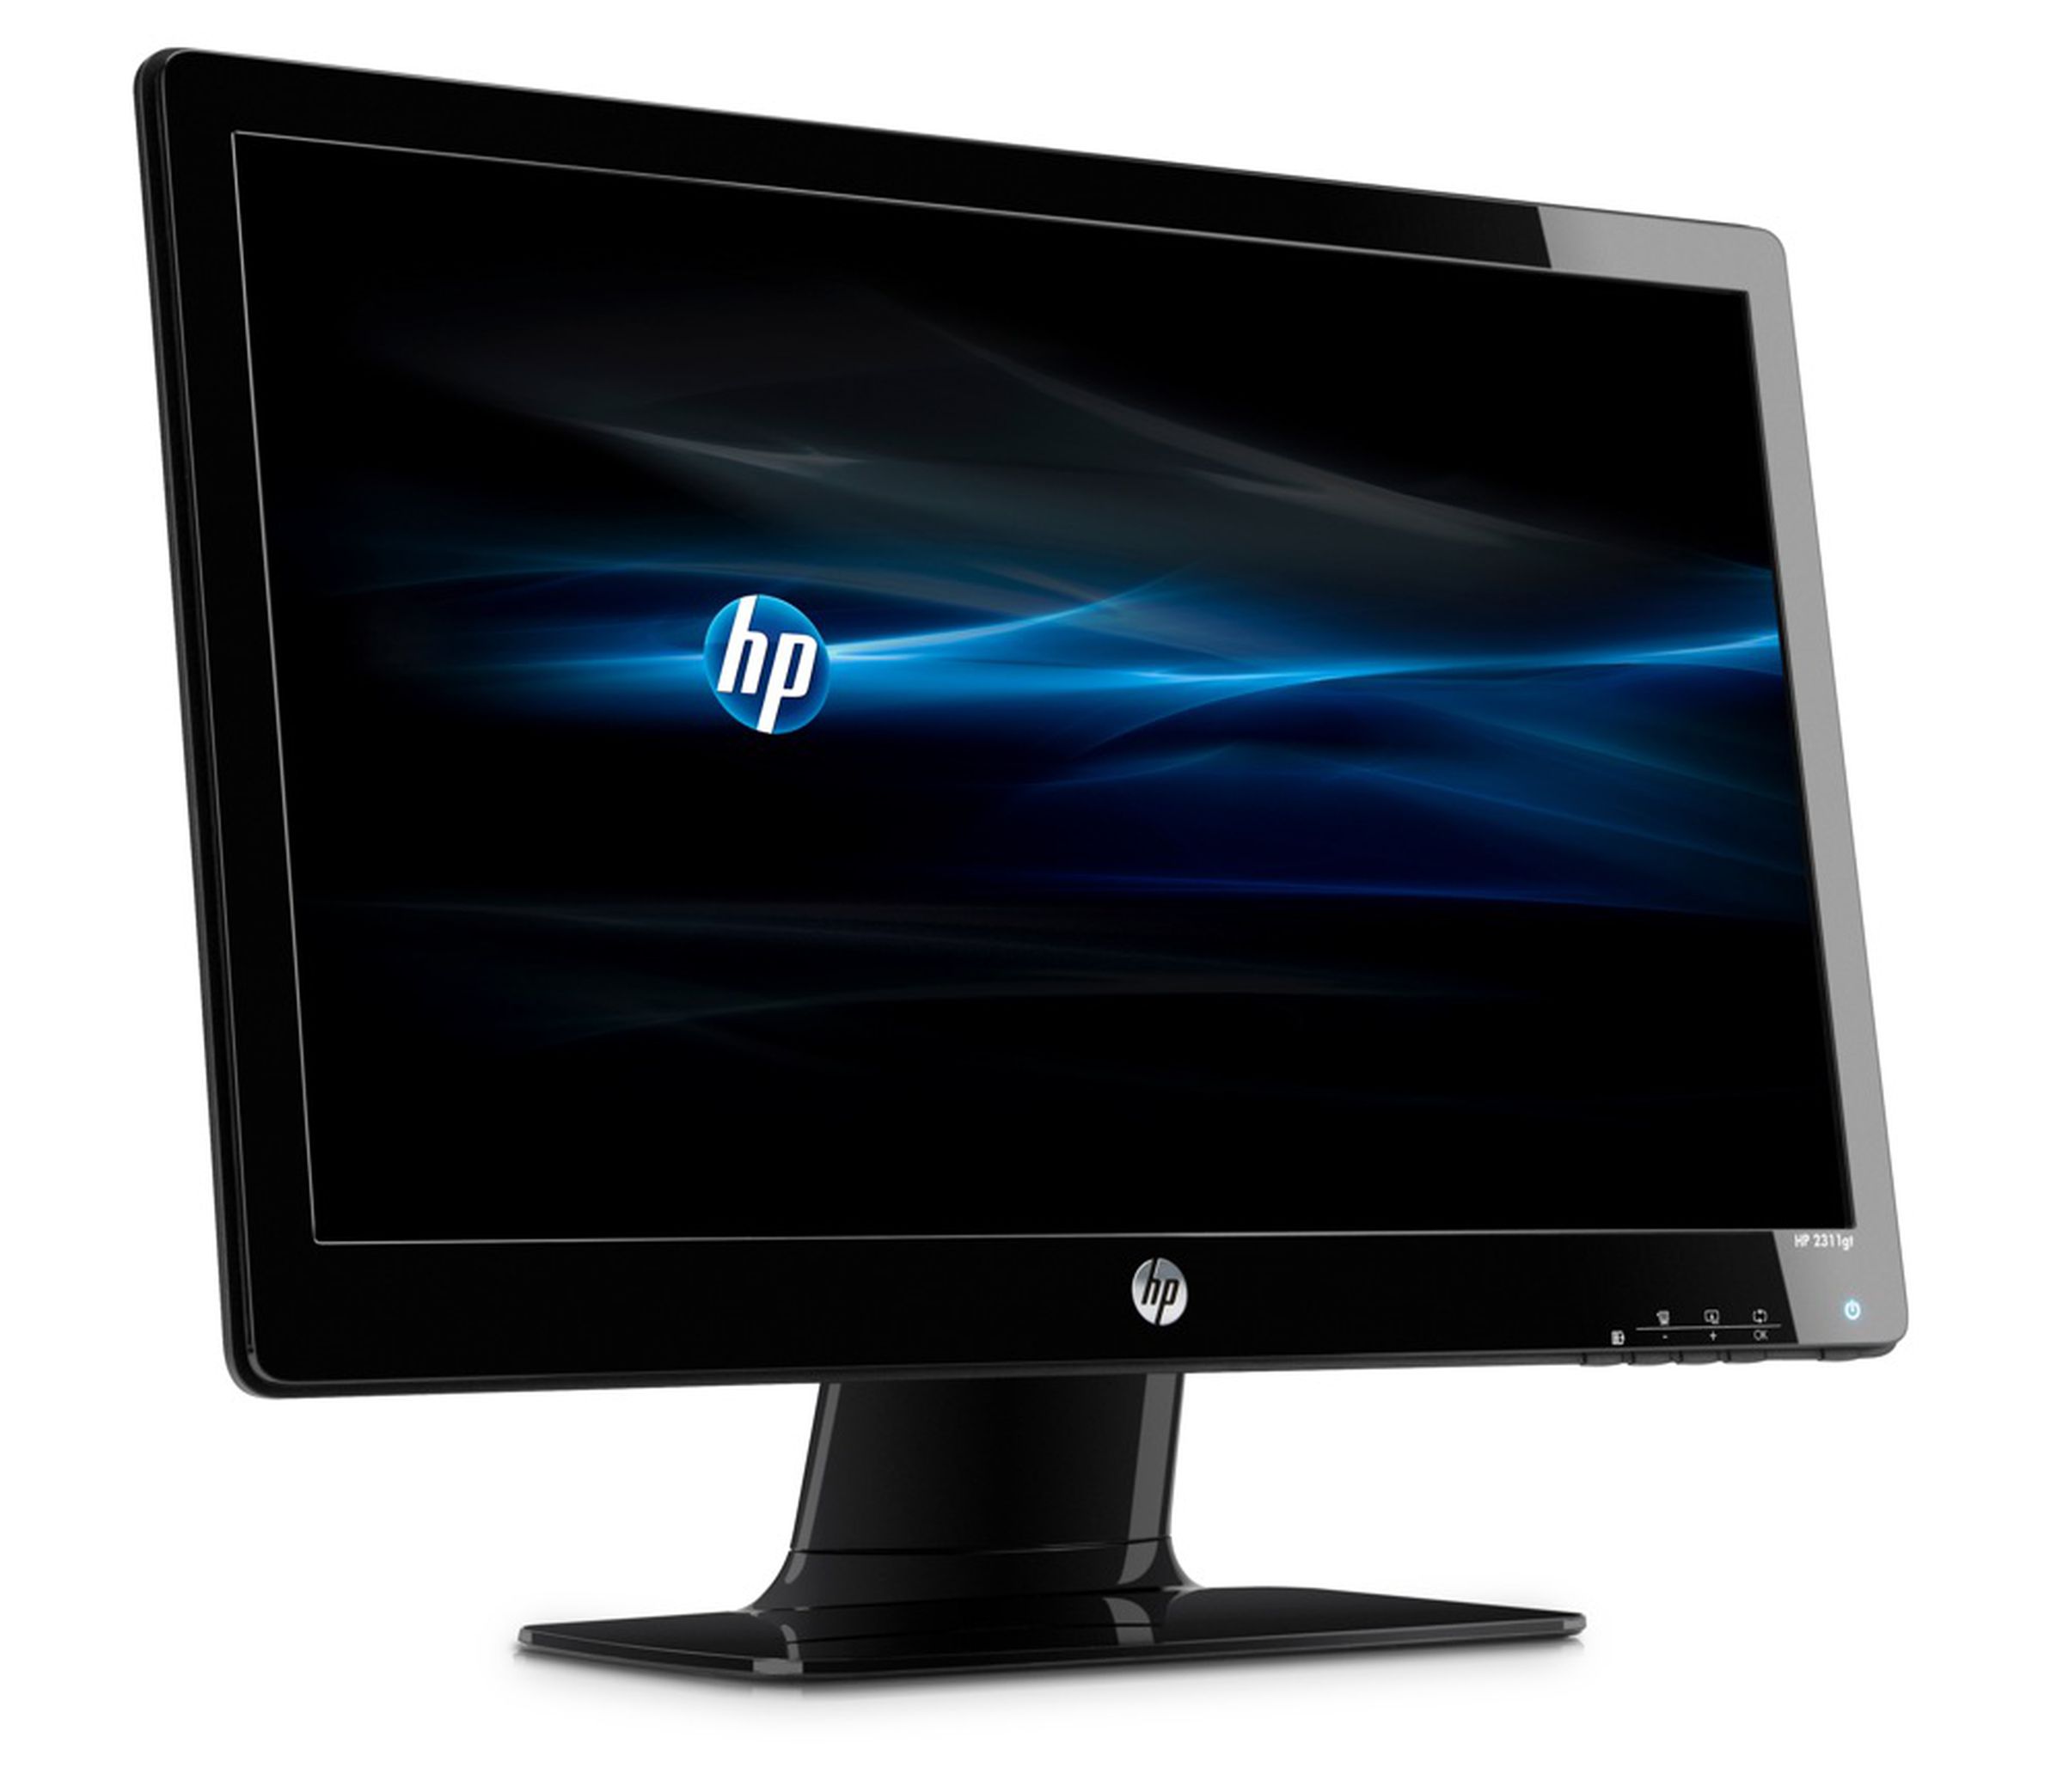 HP TouchSmart 620 3D PC and 2311gt 3D monitor press shots 